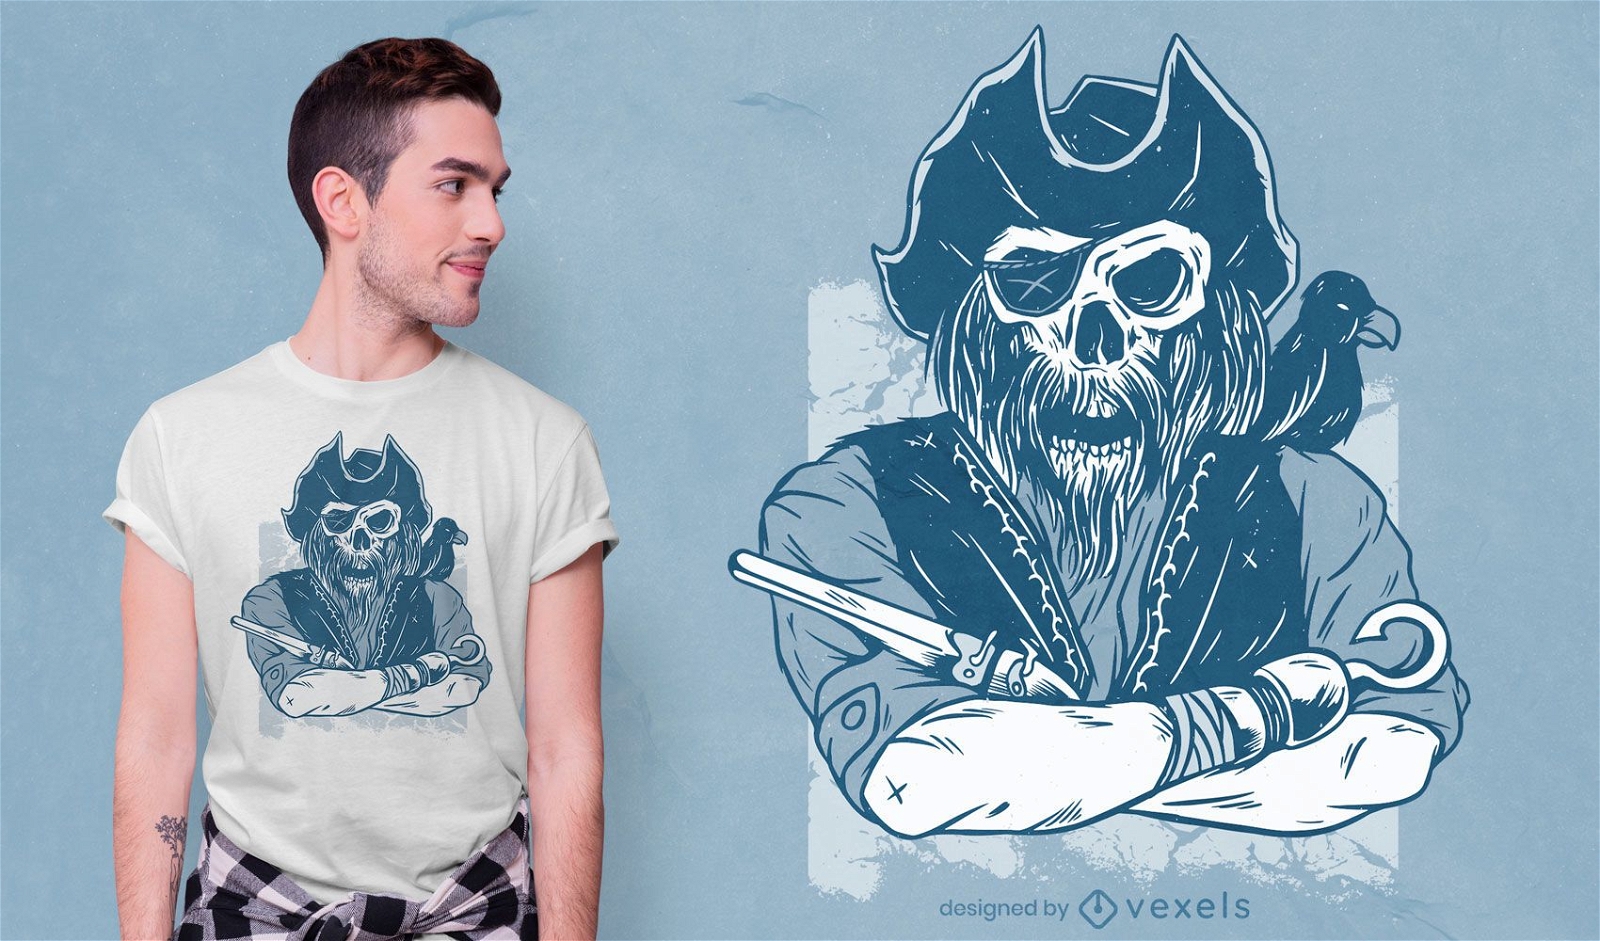 Diseño de camiseta pirata esqueleto